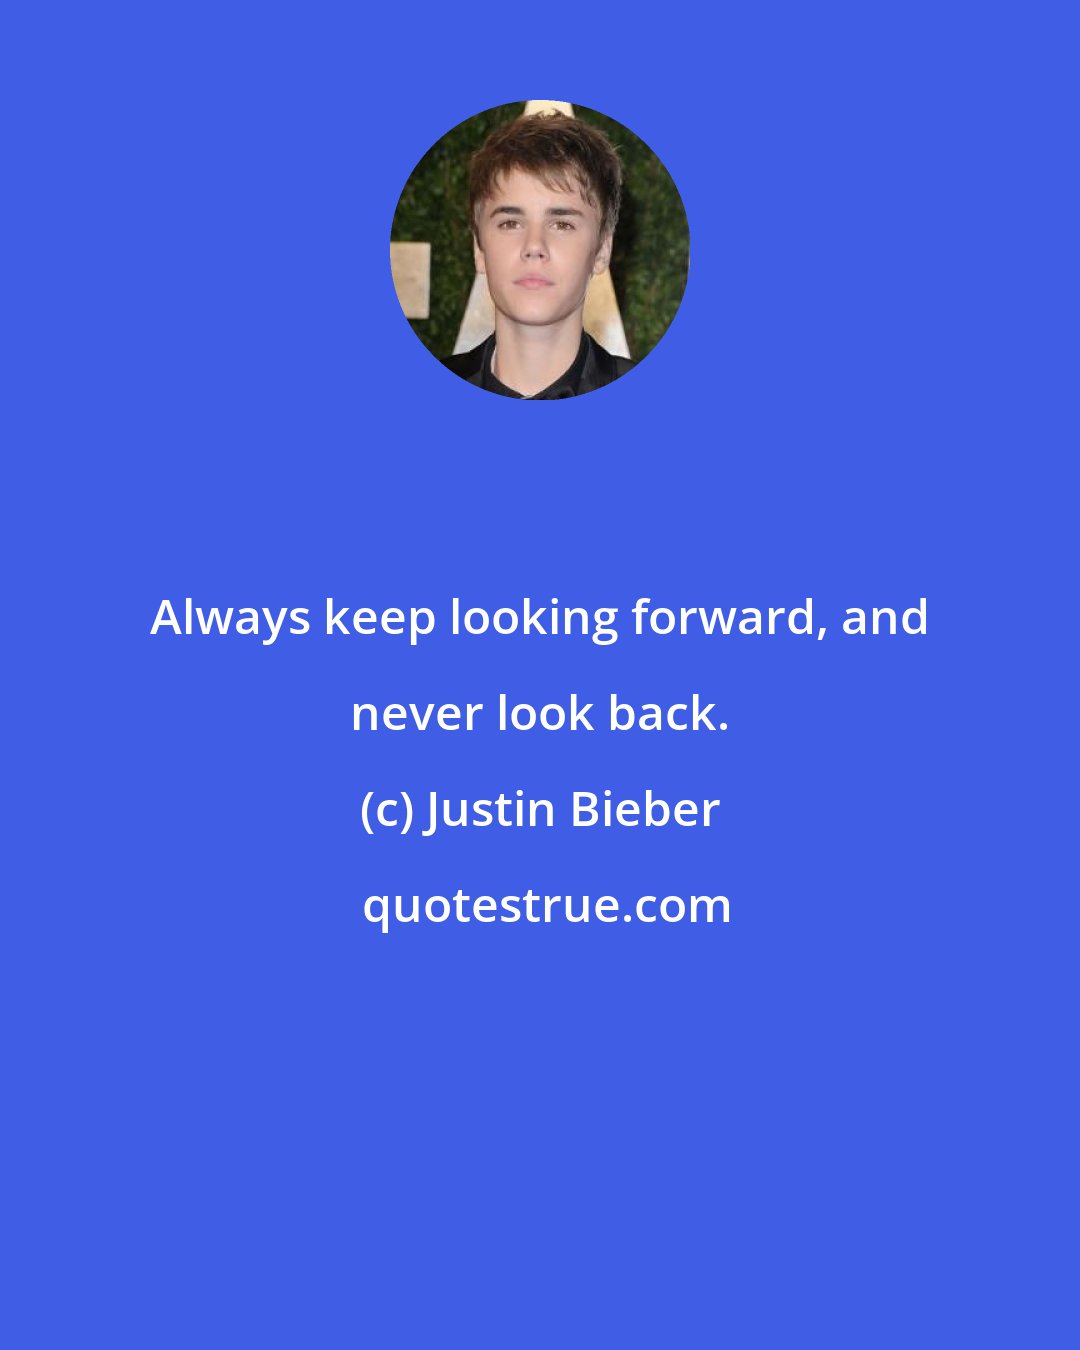 Justin Bieber: Always keep looking forward, and never look back.